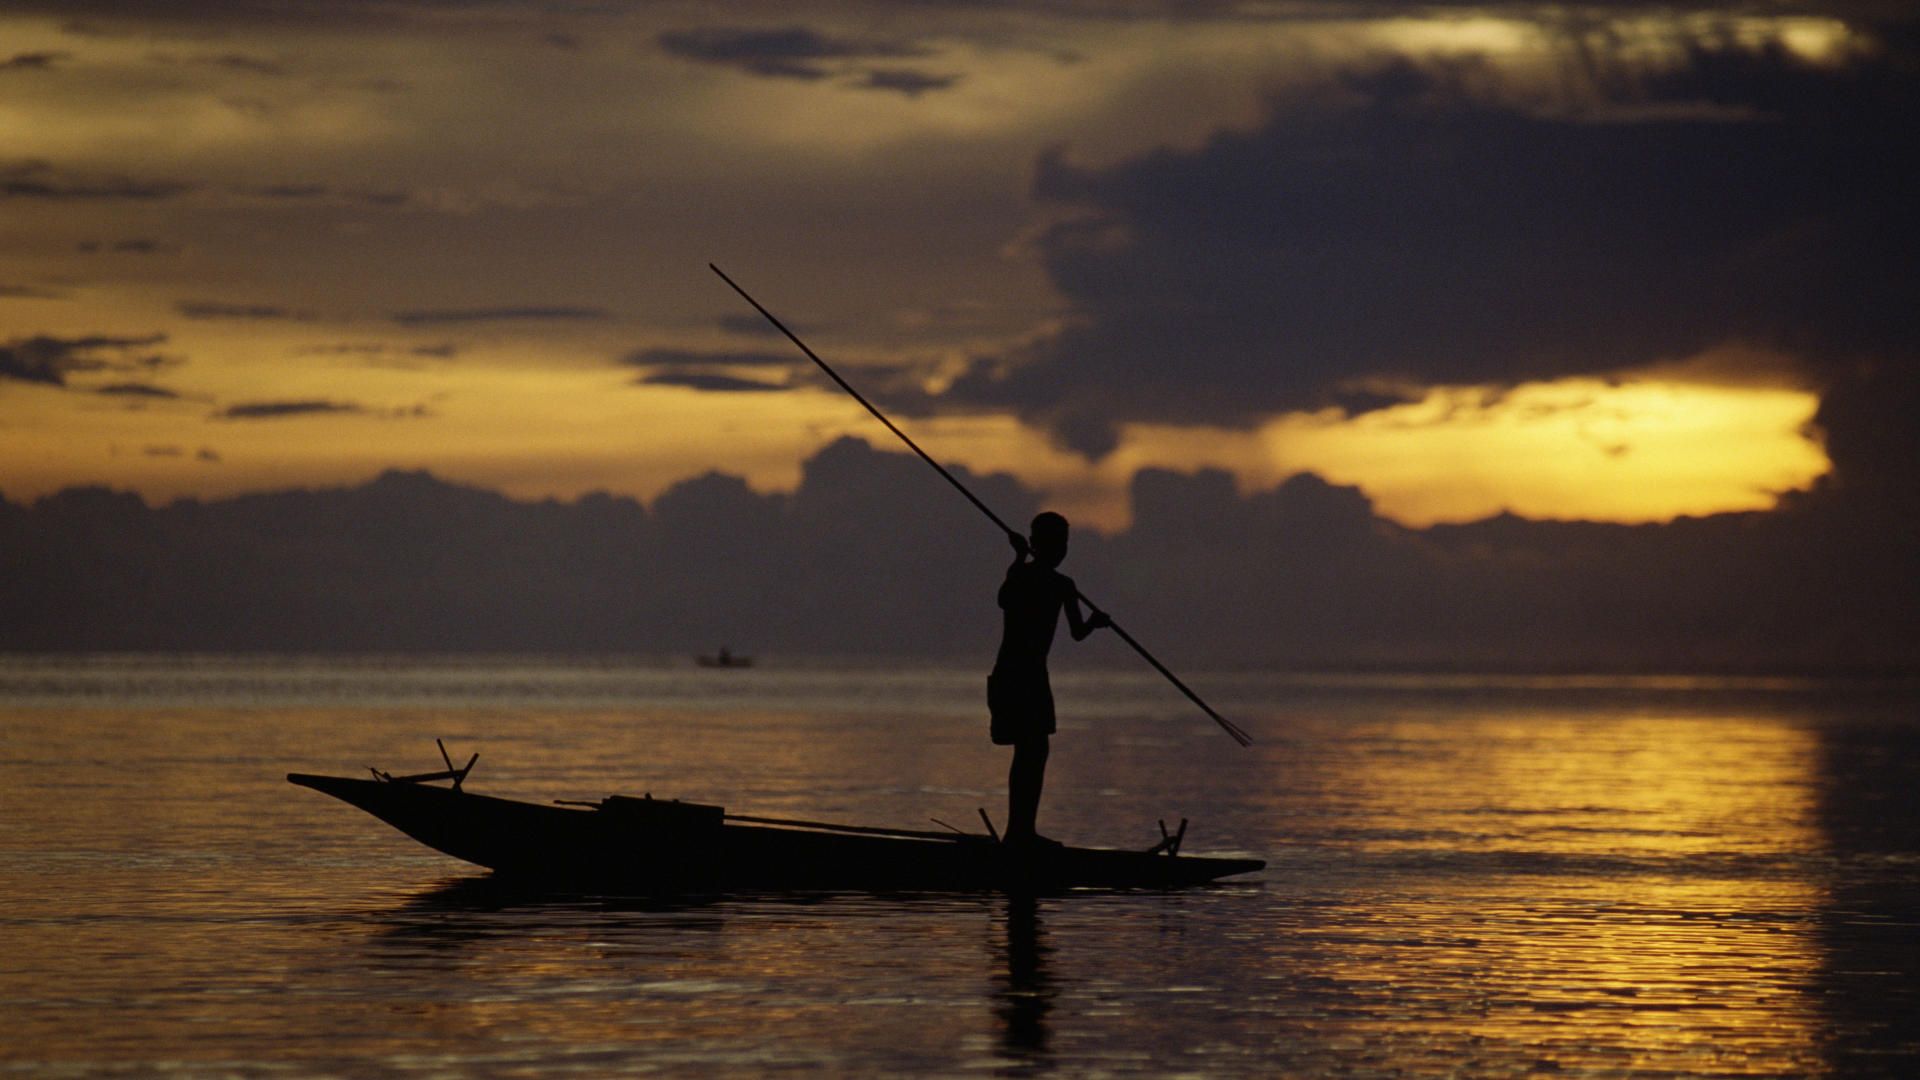 Nature Fisherman At Sunset Fergusson S Island Papua New Guinea